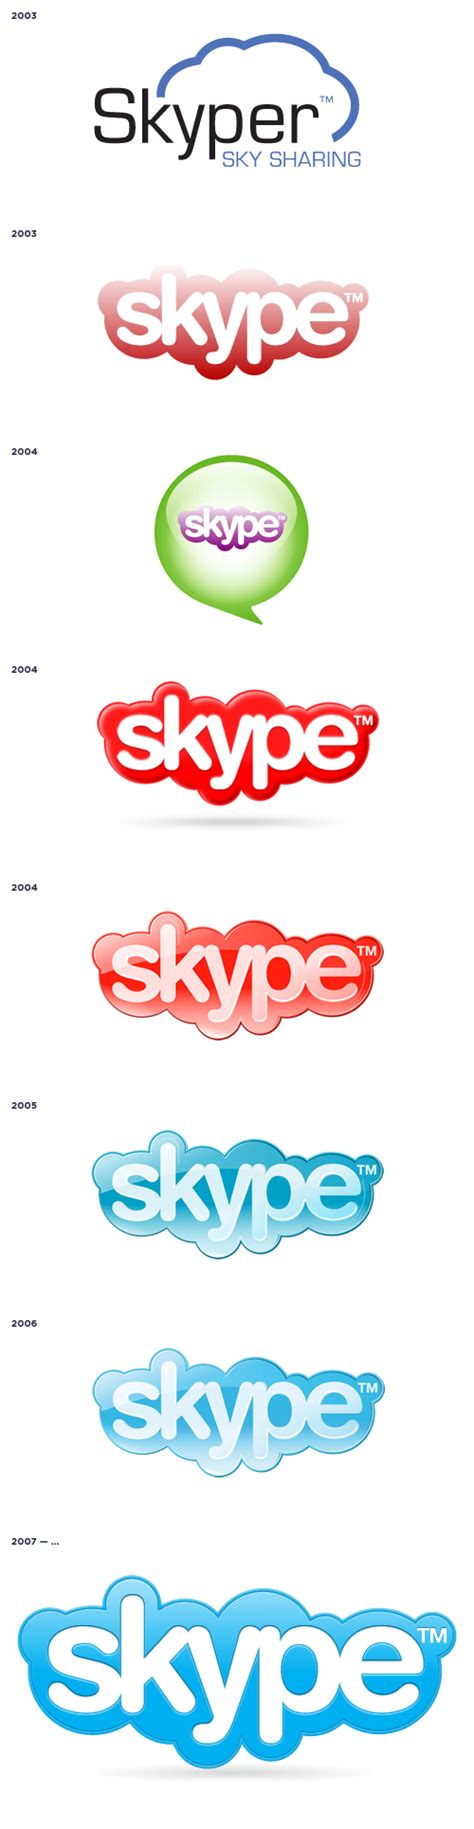 Skype Logo Through The Years Flickr Photo Sharing